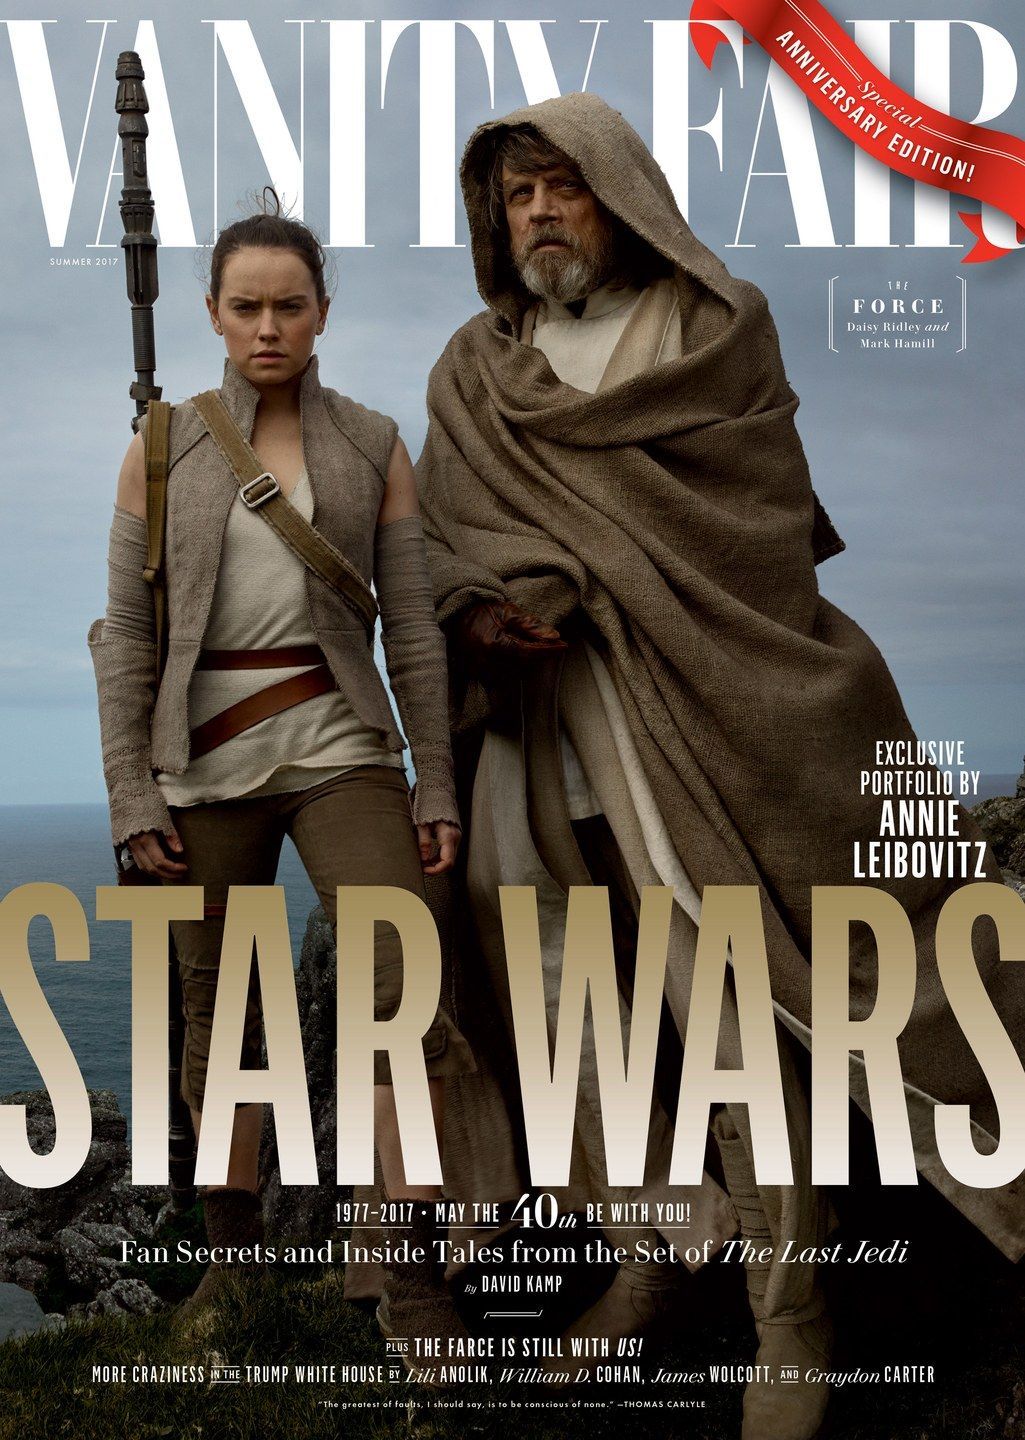 Star Wars: The Last Jedi Cast Arrives on Four Vanity Fair Covers